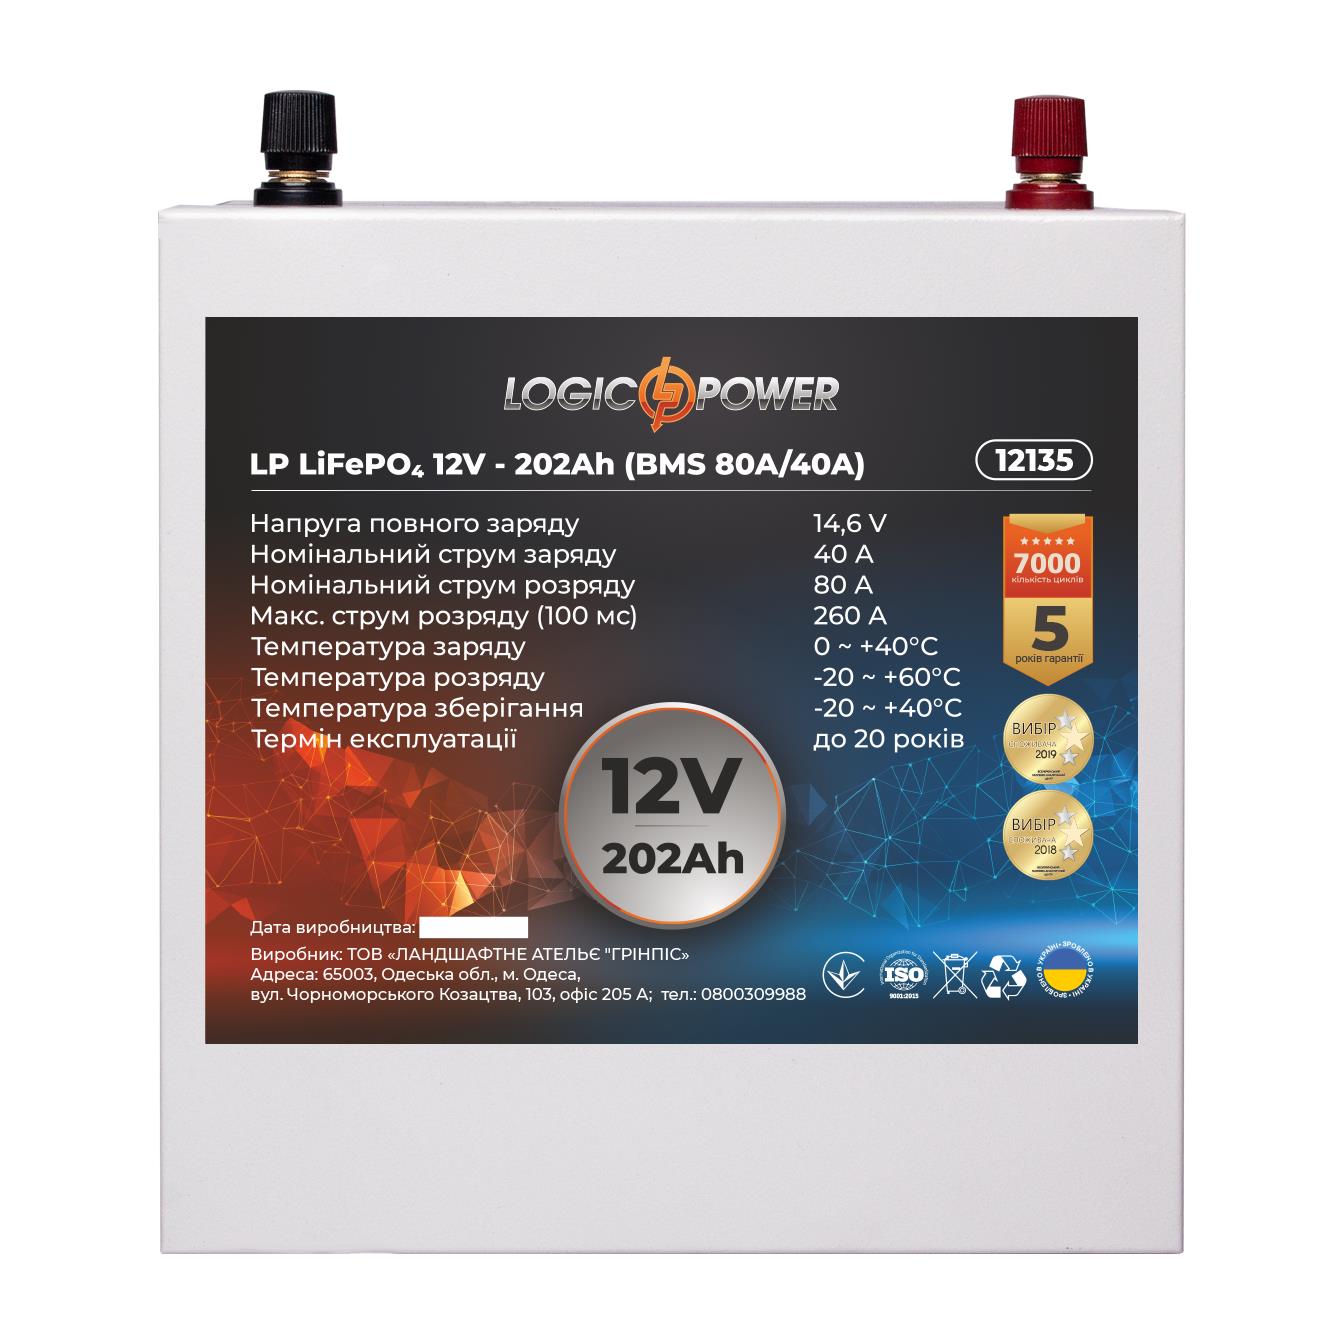 Акумулятор літій-залізо-фосфатний LogicPower LP LiFePO4 12V - 202 Ah (BMS 80A/40A) метал (12135)